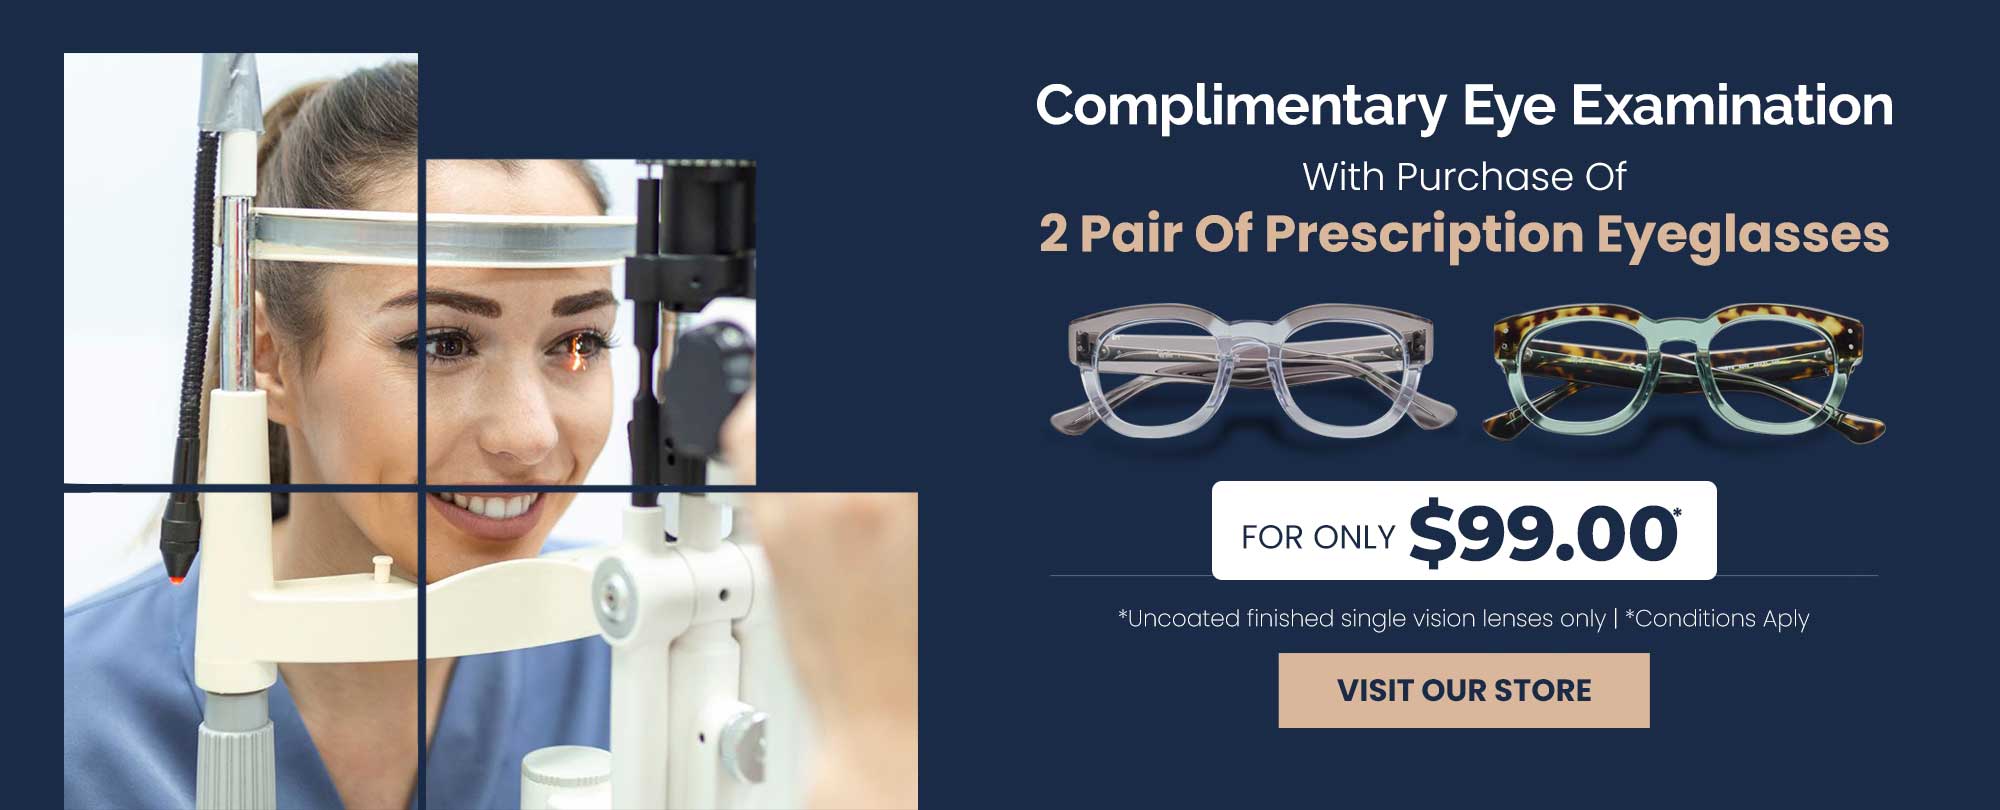 Complimentary Eye Examination at Alabama Family Optometry